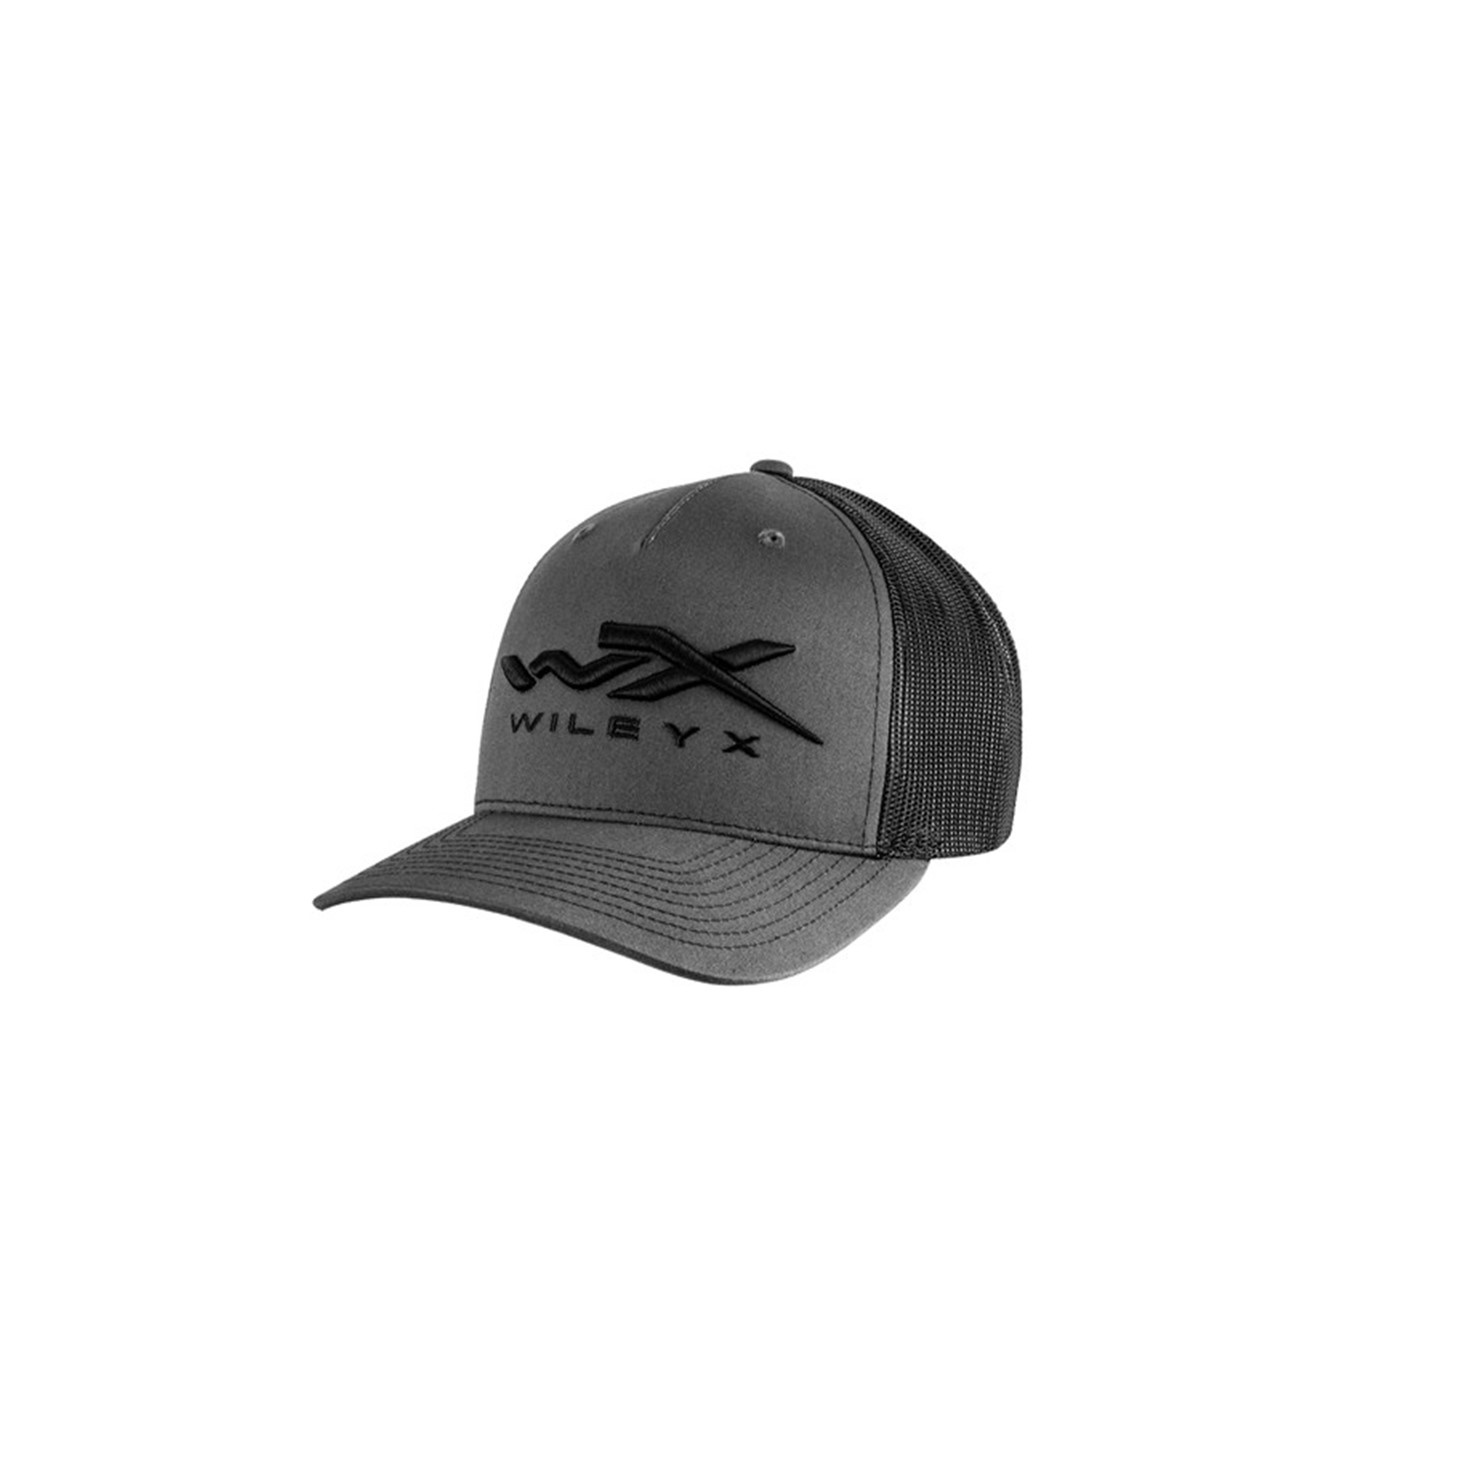 Wiley X Mesh Hat Charcoal/Black